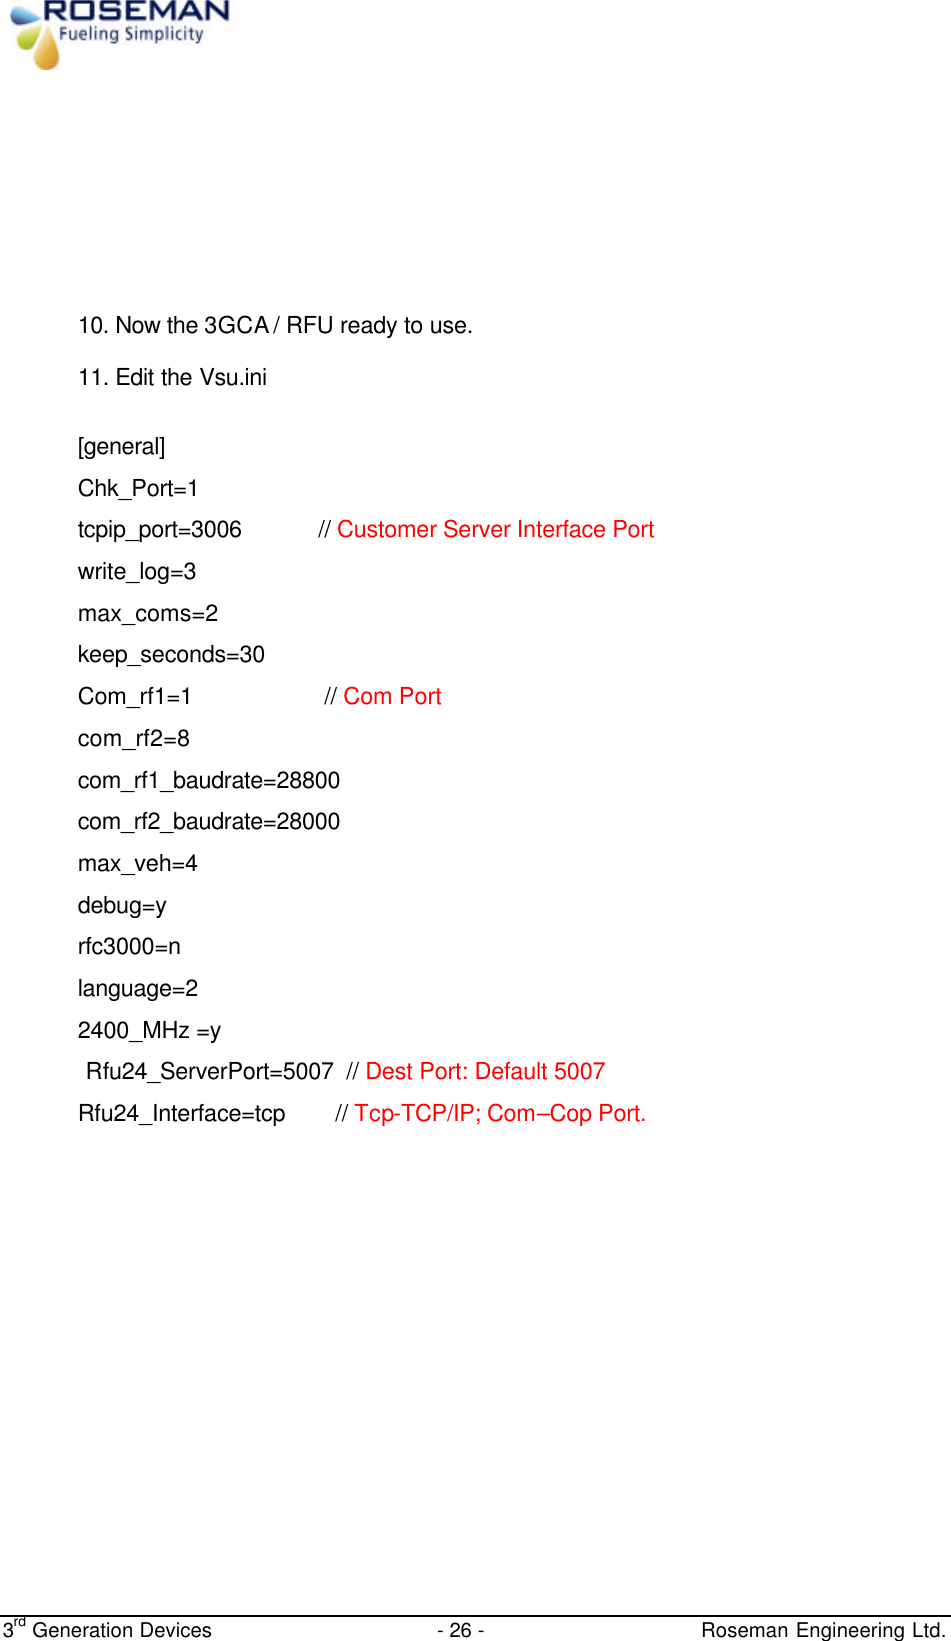  3rd Generation Devices - 26 -   Roseman Engineering Ltd.         10. Now the 3GCA / RFU ready to use.  11. Edit the Vsu.ini  [general] Chk_Port=1  tcpip_port=3006            // Customer Server Interface Port  write_log=3 max_coms=2 keep_seconds=30 Com_rf1=1                     // Com Port com_rf2=8 com_rf1_baudrate=28800 com_rf2_baudrate=28000 max_veh=4 debug=y rfc3000=n    language=2 2400_MHz =y             Rfu24_ServerPort=5007  // Dest Port: Default 5007  Rfu24_Interface=tcp        // Tcp-TCP/IP; Com–Cop Port.  